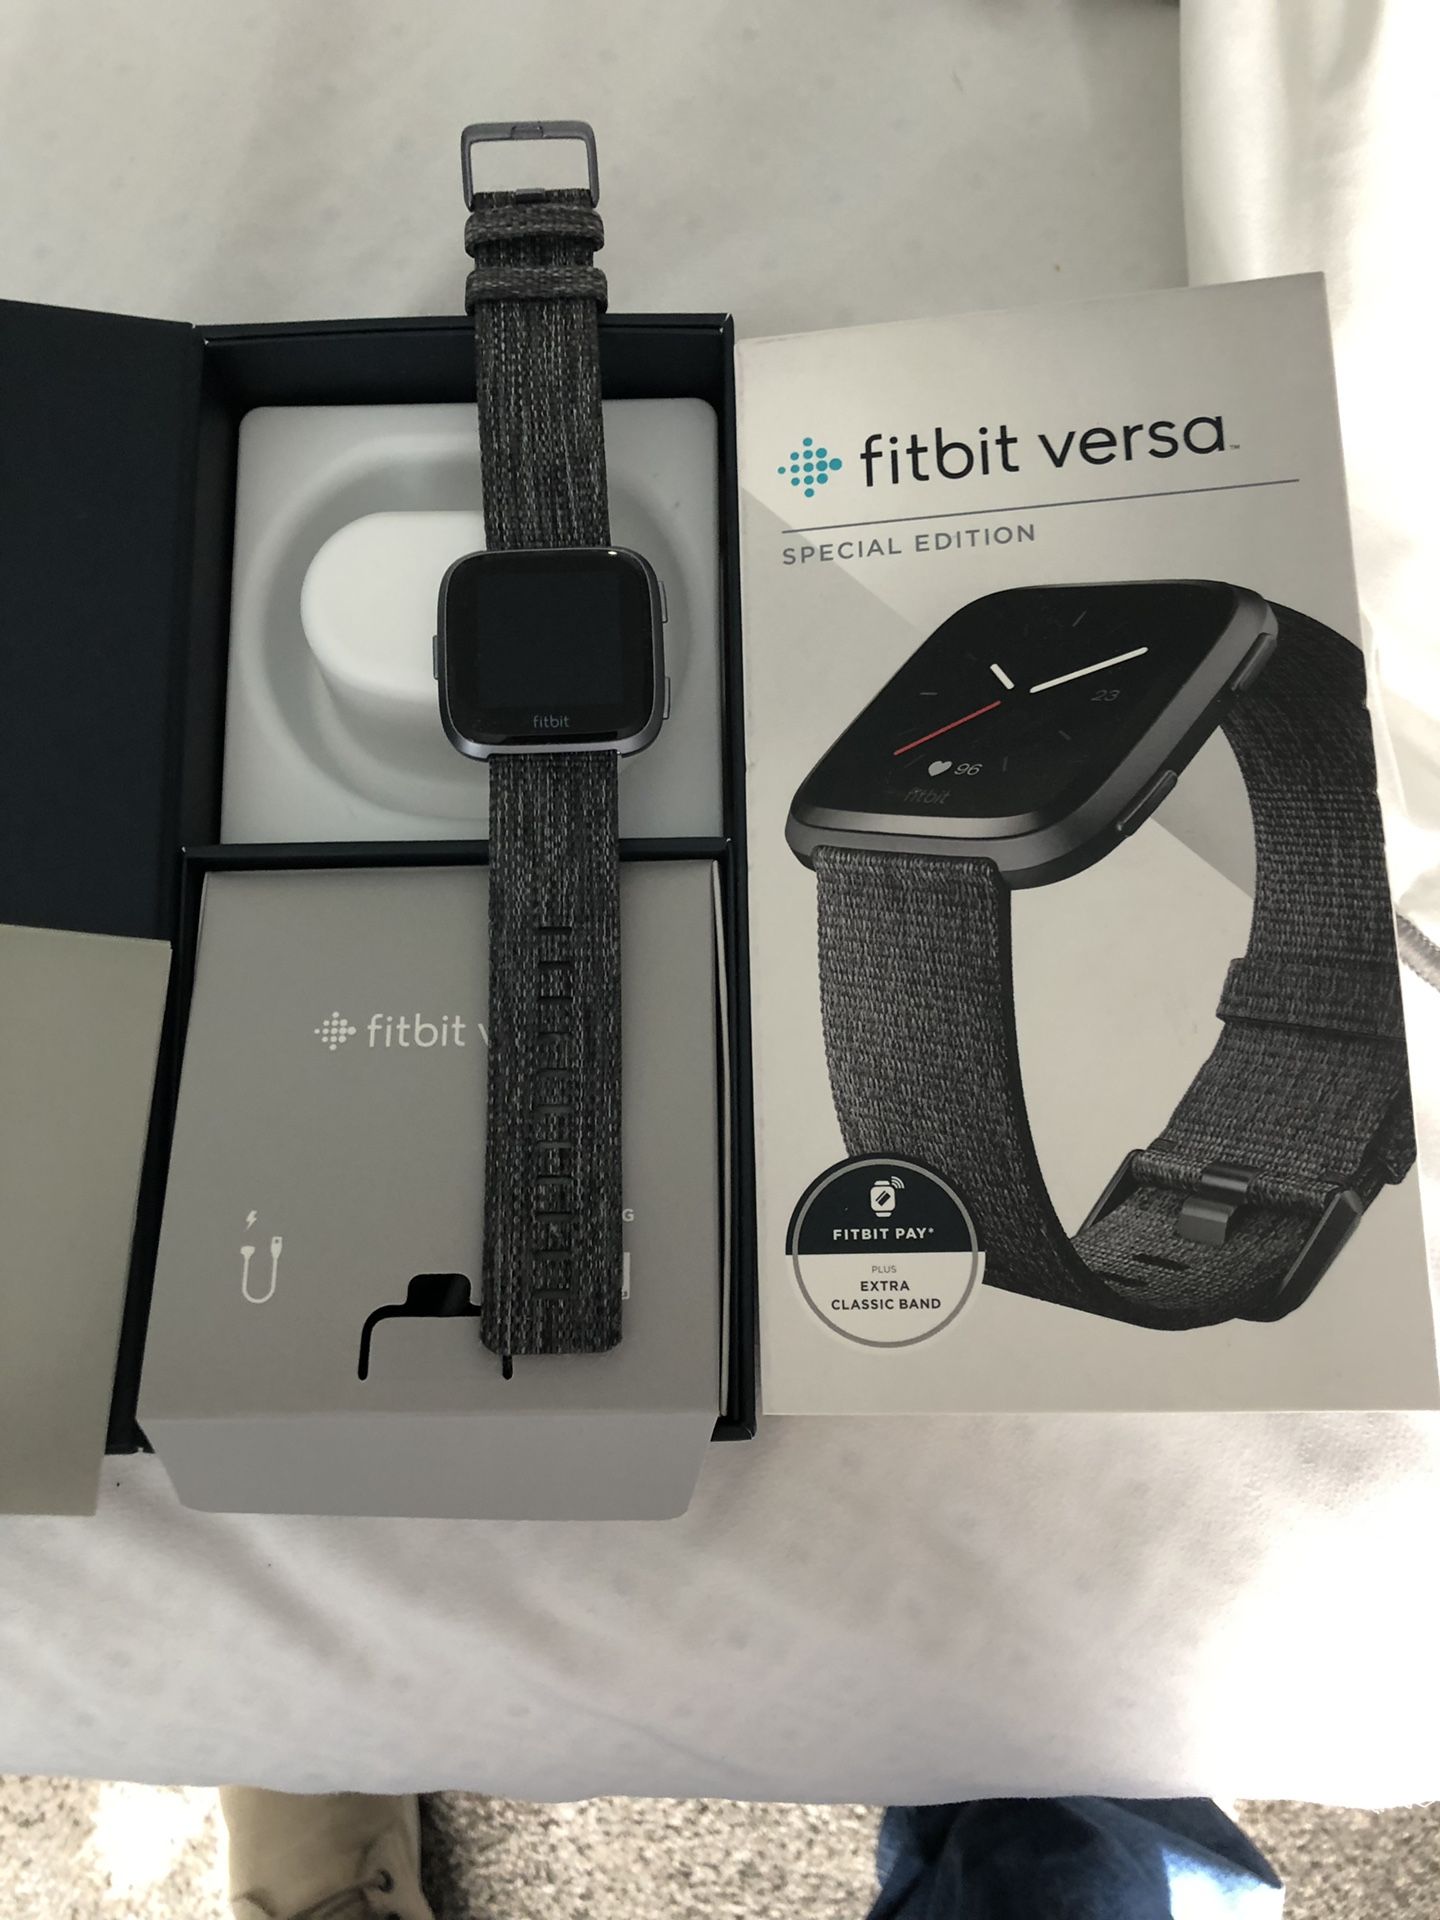 Verse Fitbit brand new